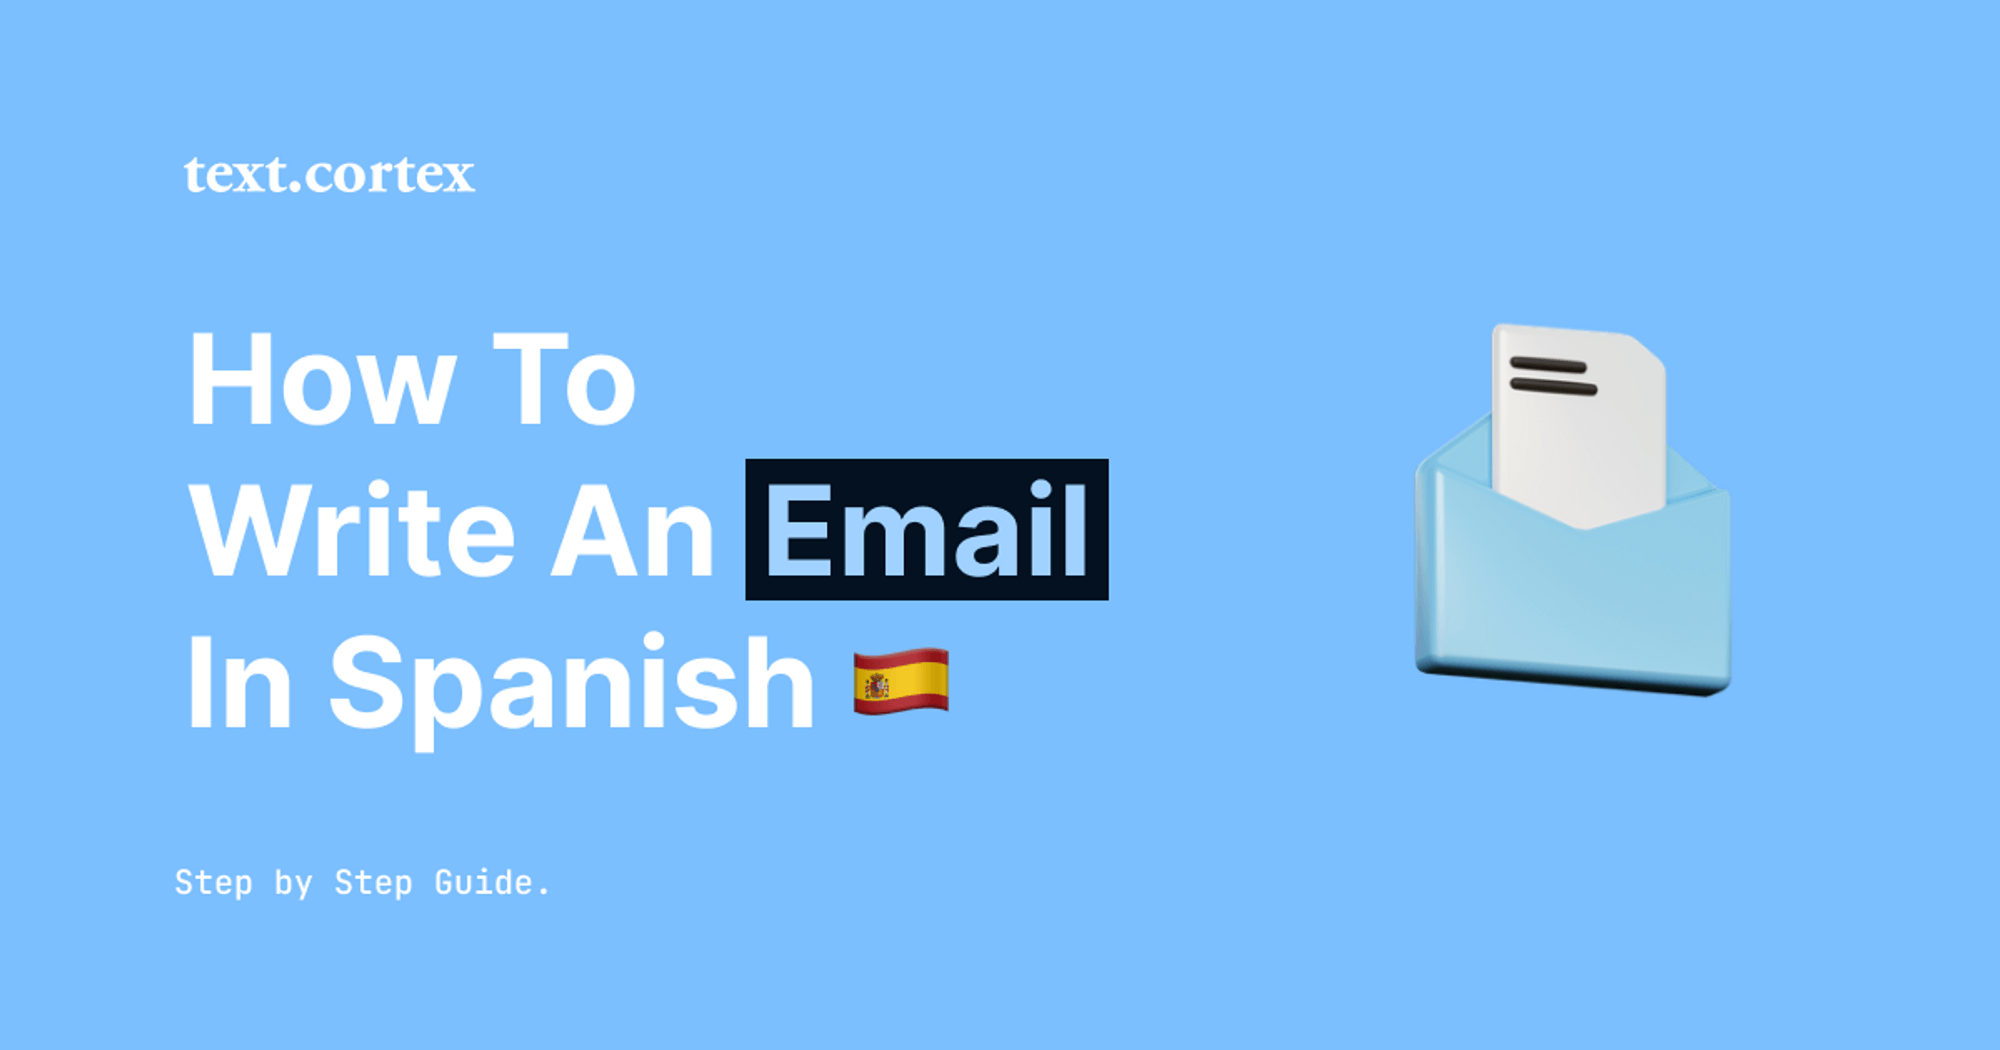 Cómo escribir un correo electrónico en español - Guía paso a paso